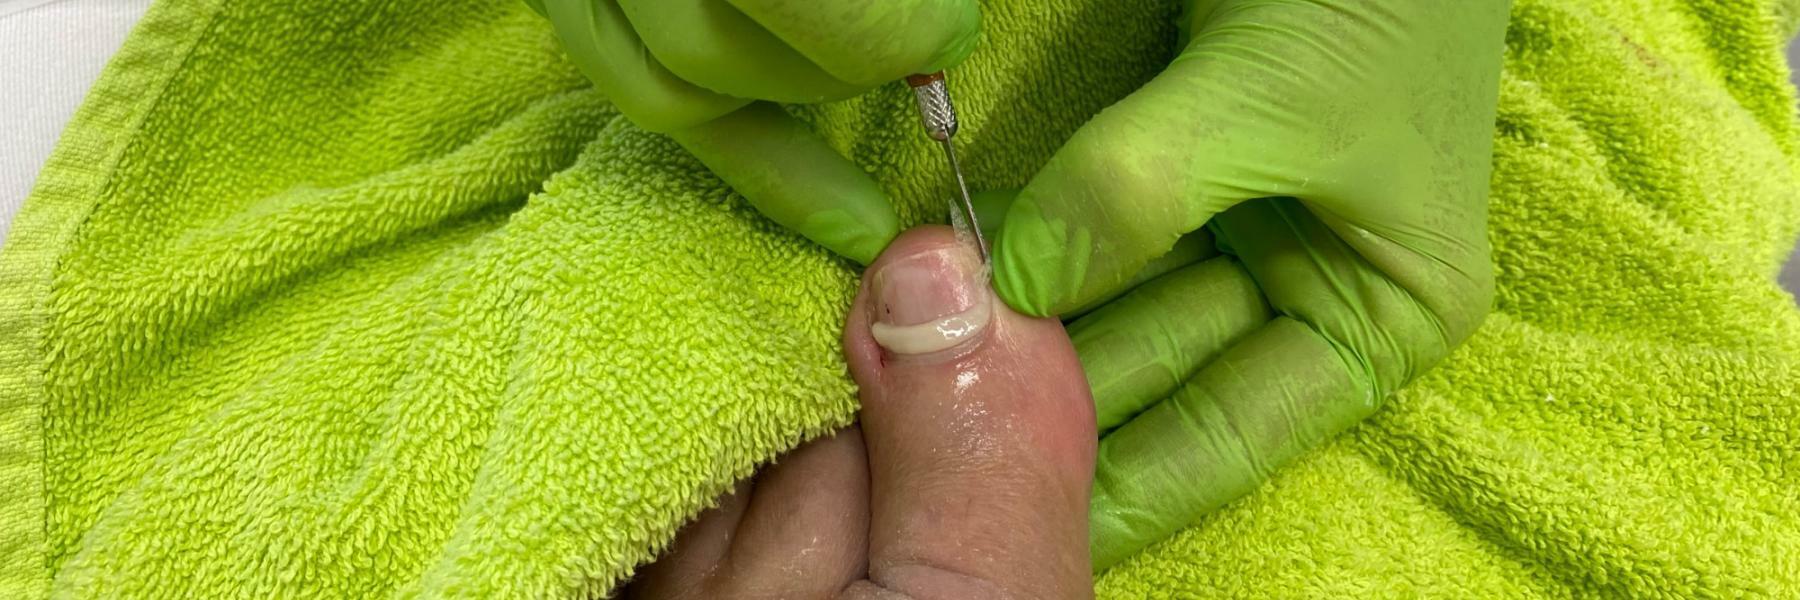 Fußbehandlung mit Nagelvlies